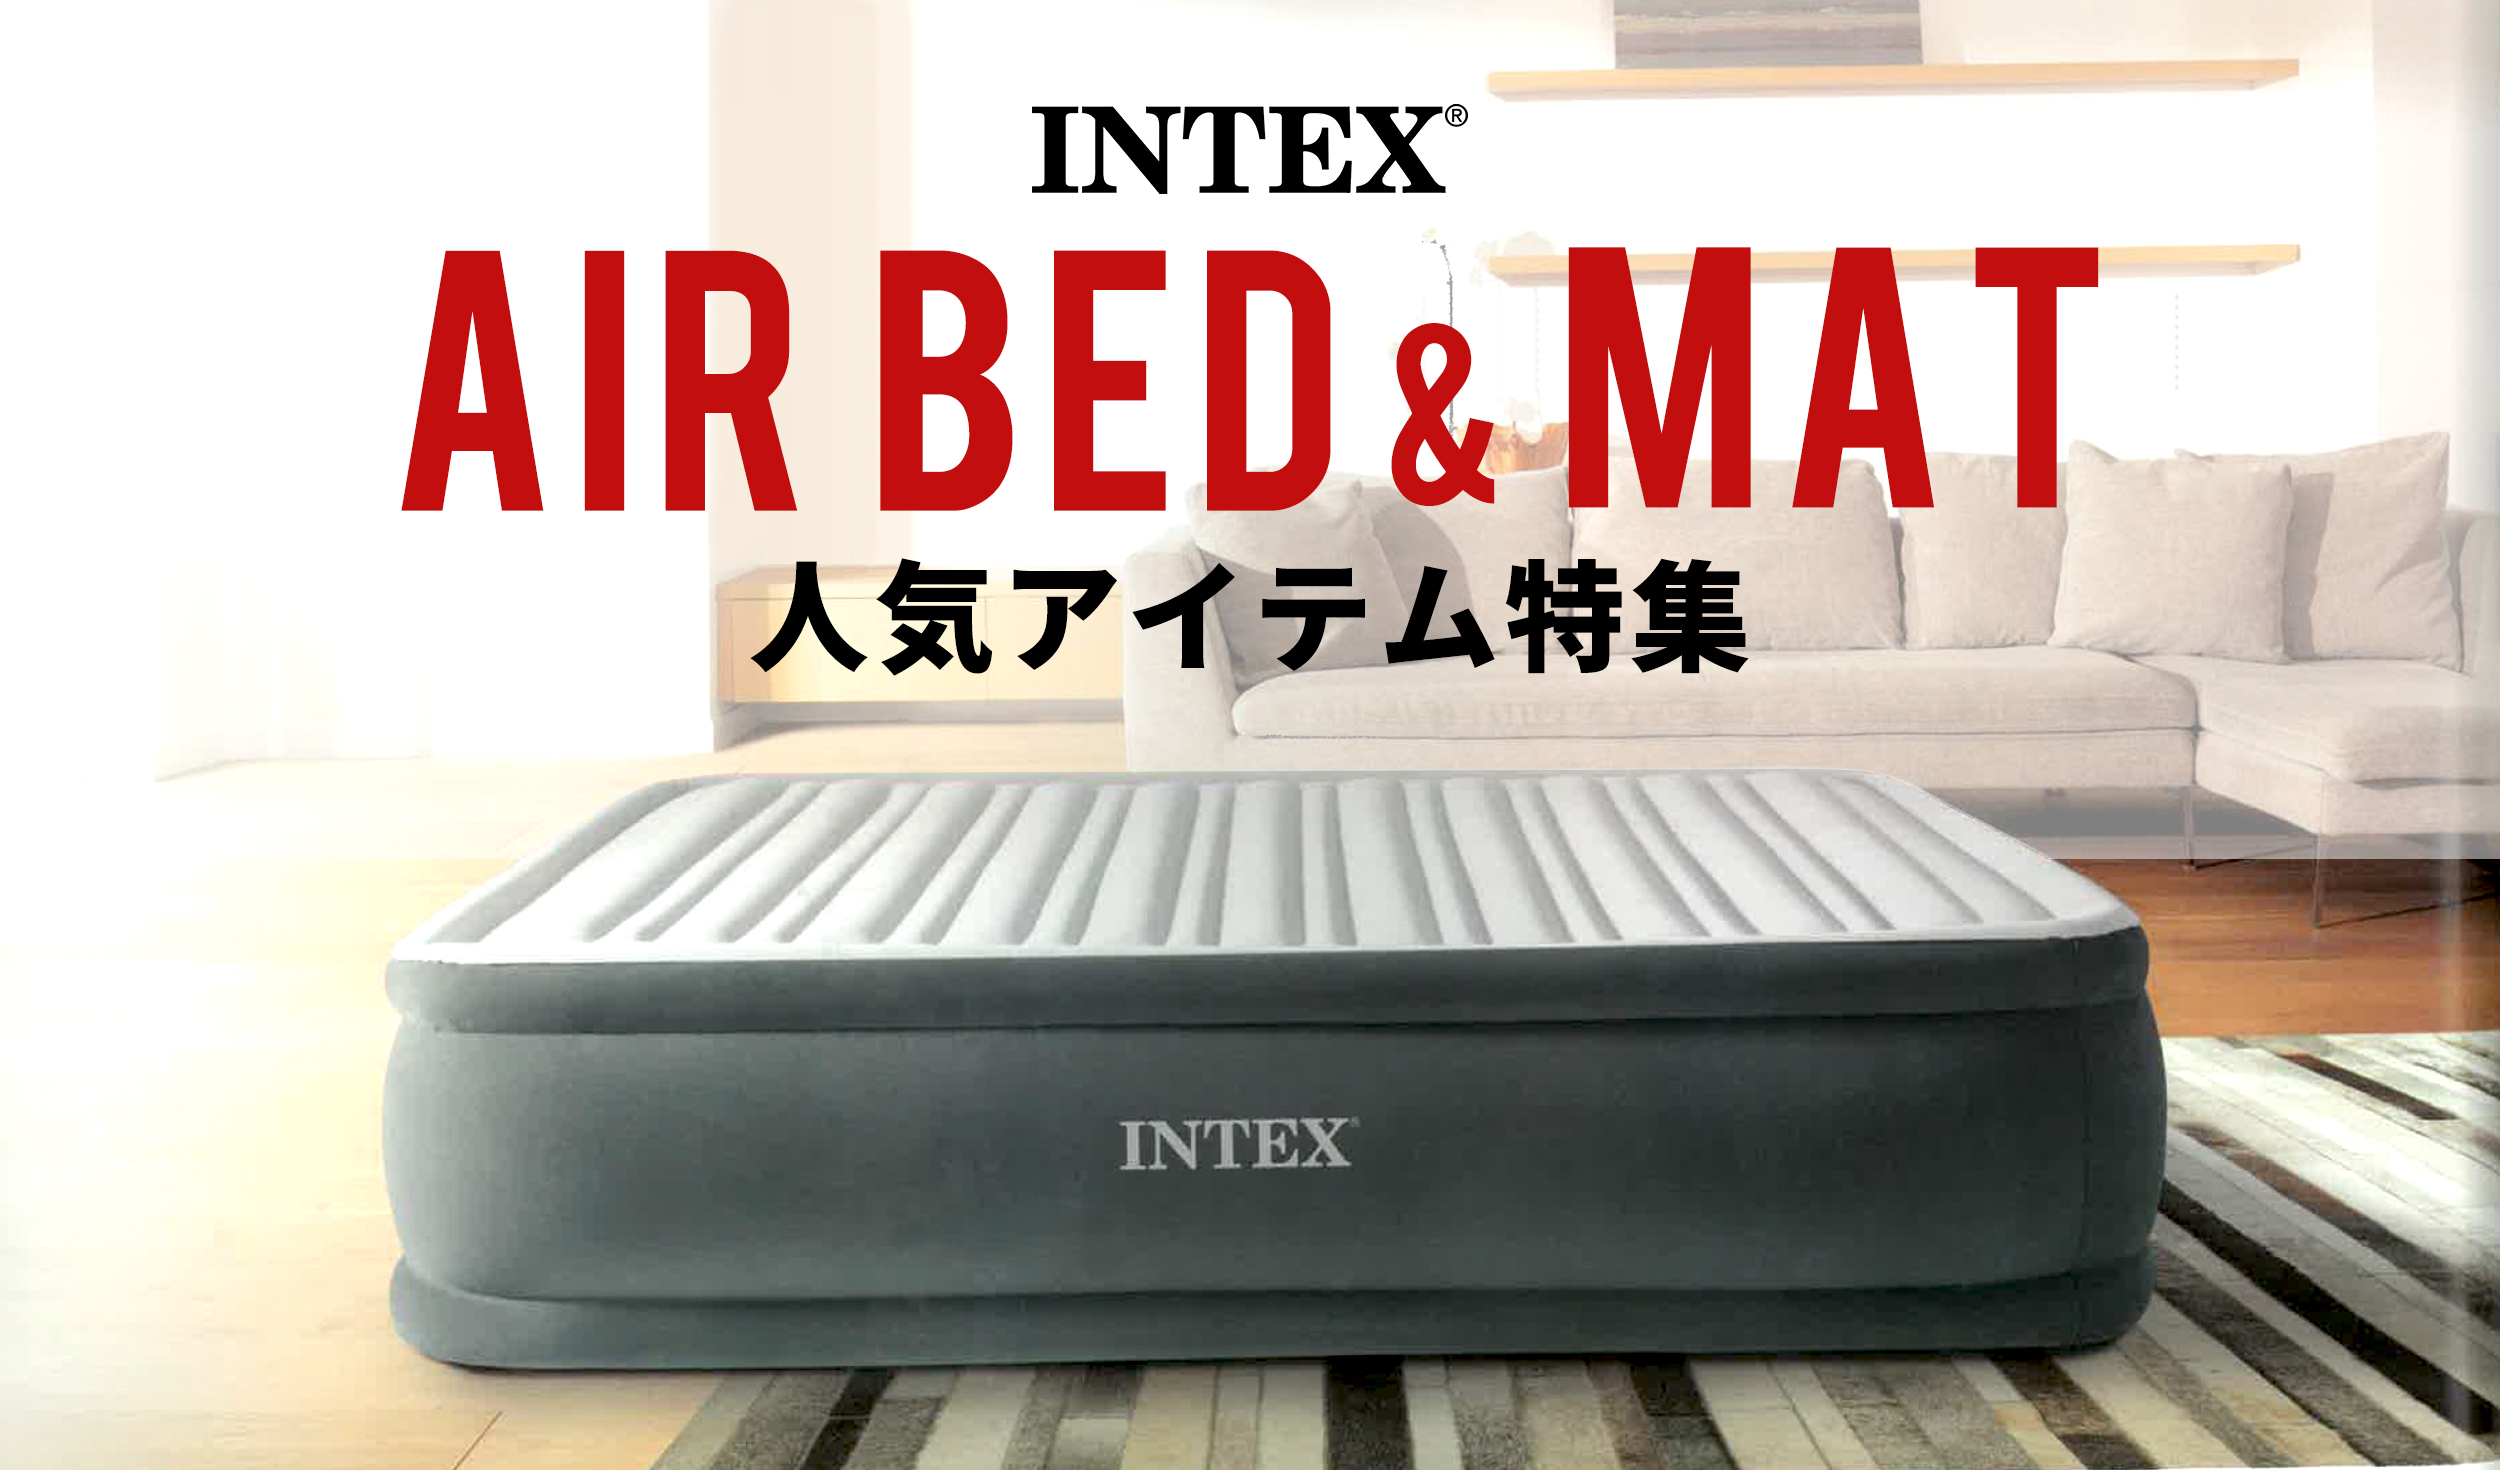 INTEX AIR BED & MAT人気アイテム特集